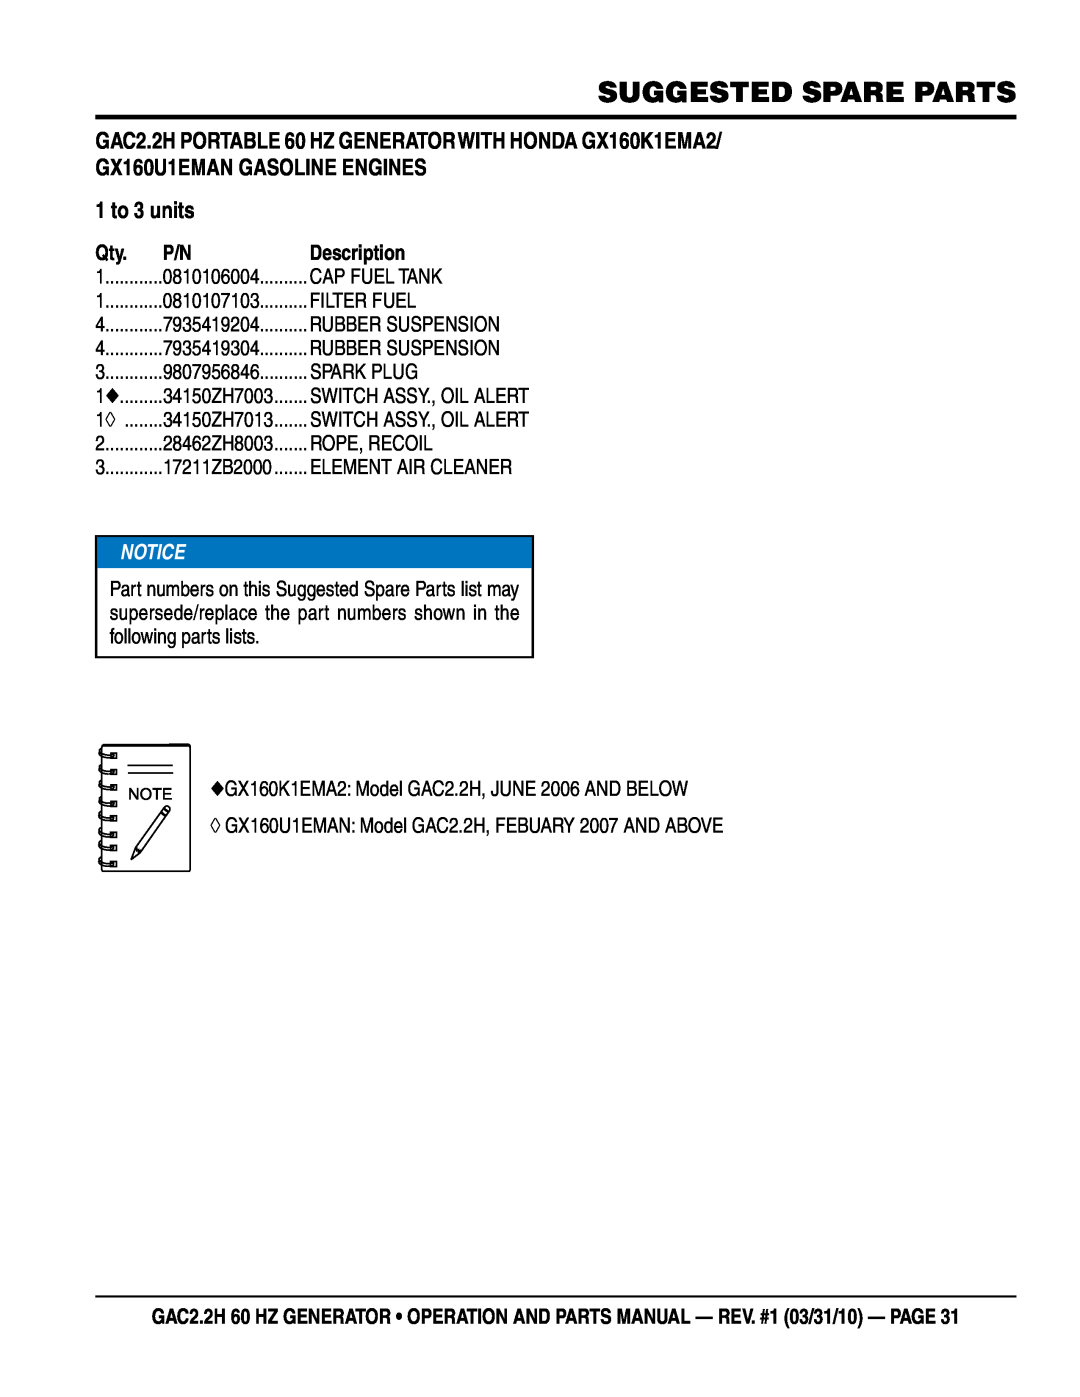 Multiquip GAC2.2H manual Suggested Spare Parts, 1 to 3 units, description 